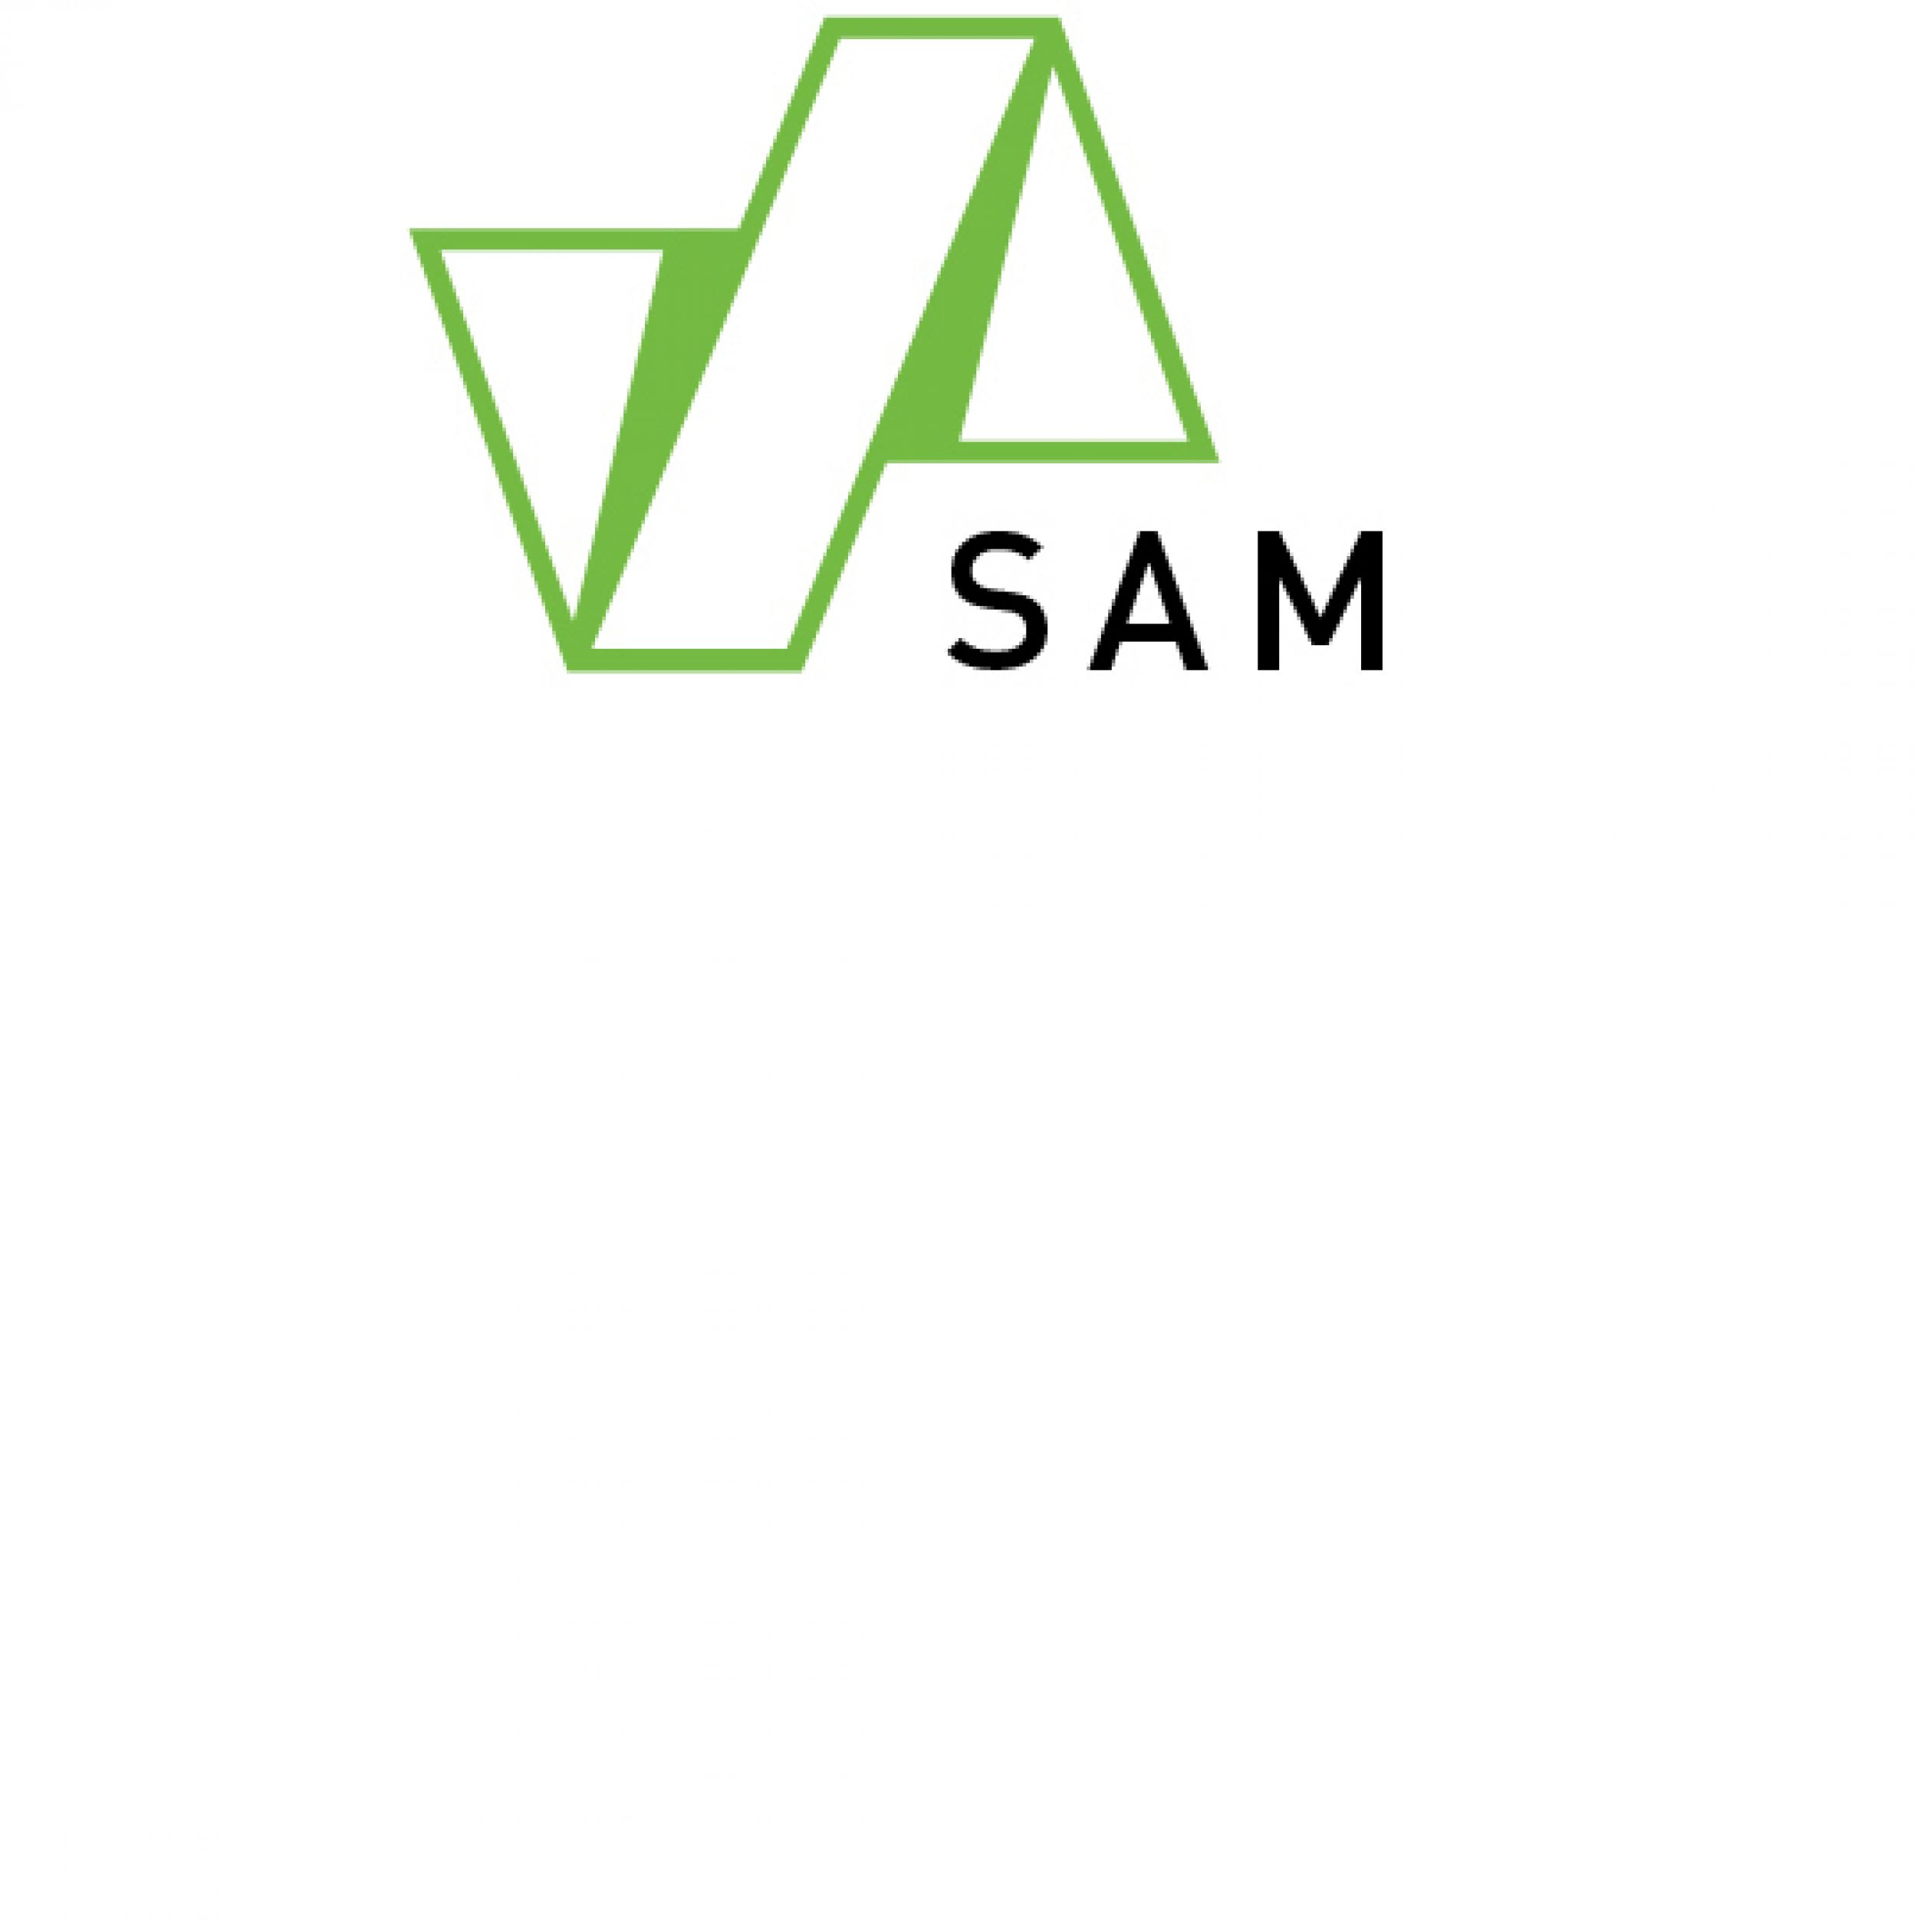 SGS Economics and Planning SAM logo 01